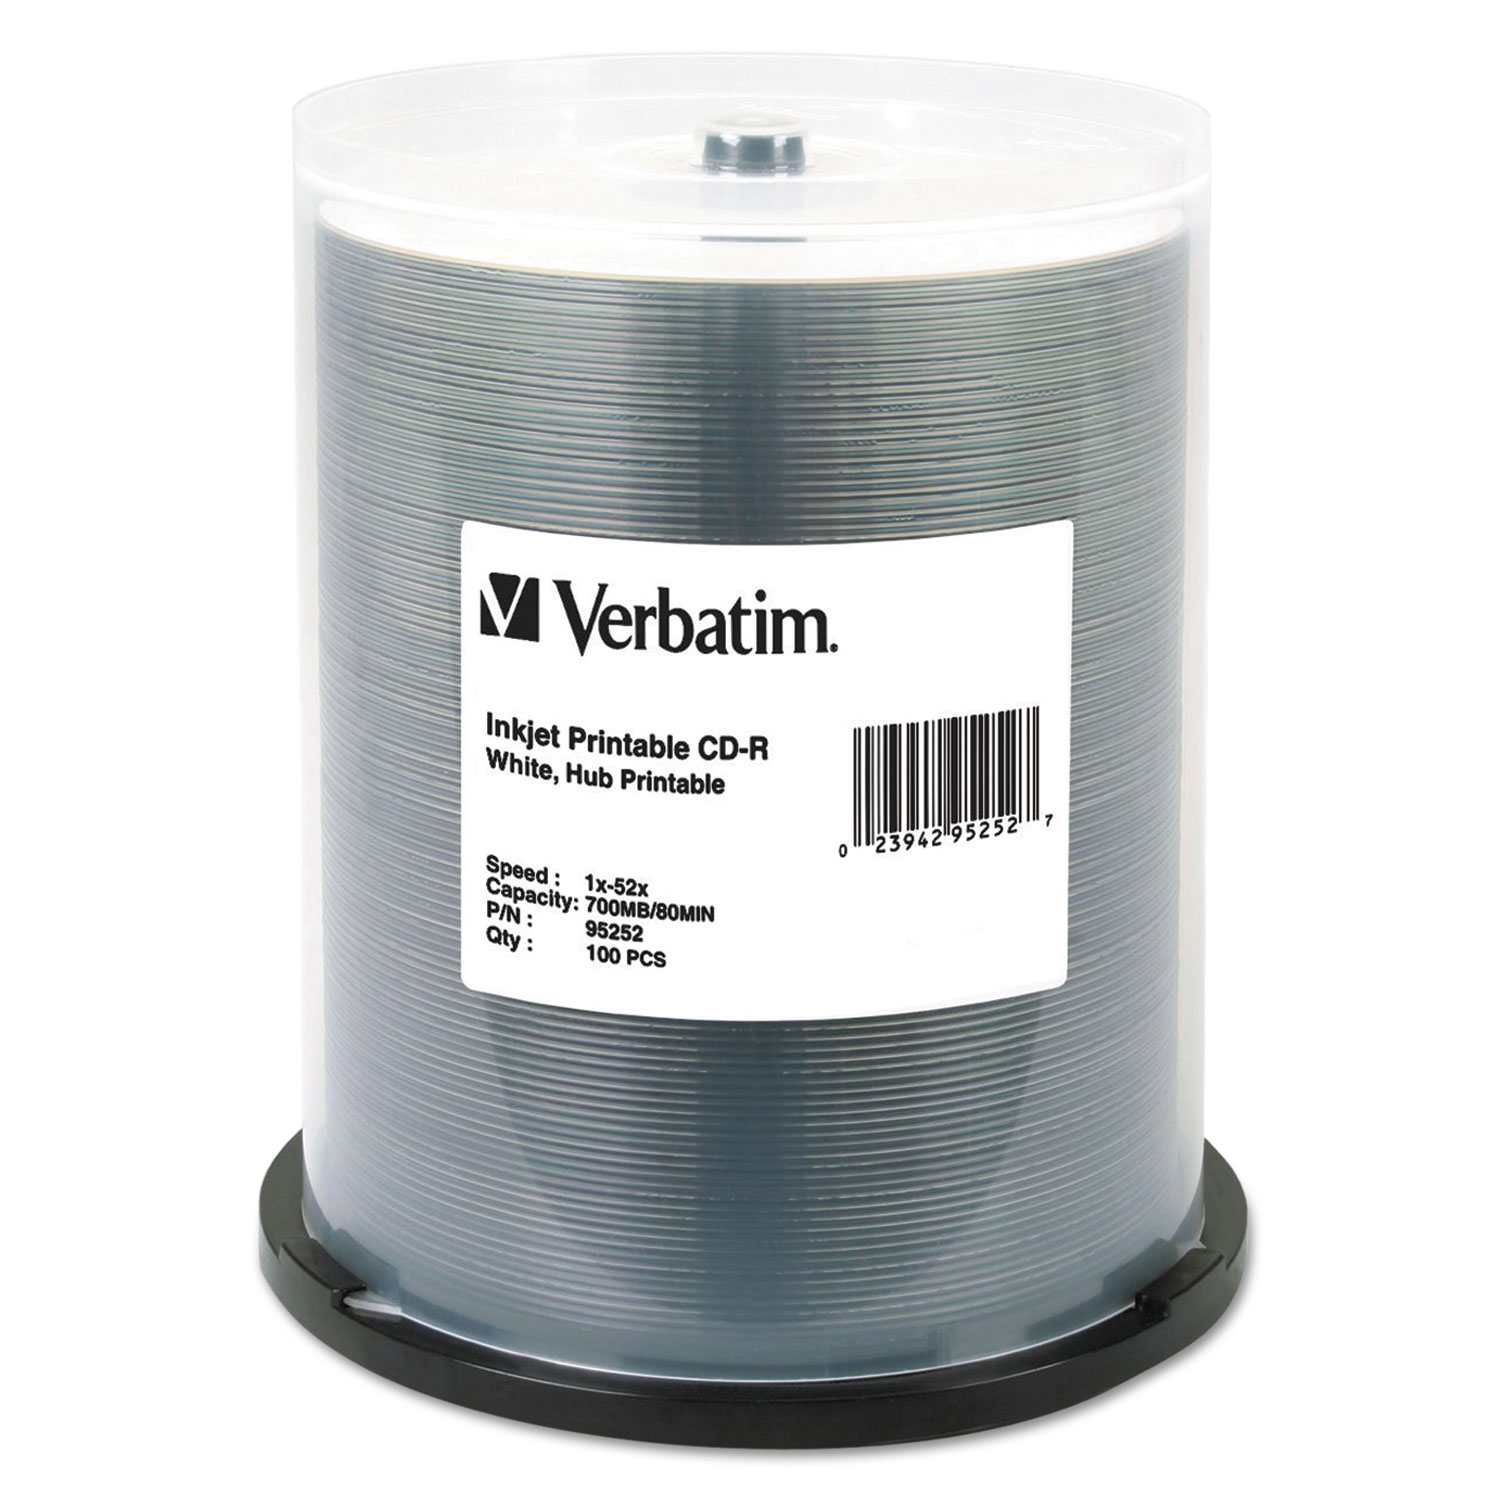  Verbatim 95252 CD-R, 700MB, 52X, White Inkjet Printable, Hub Printable, 100/PK Spindle (VER95252) 